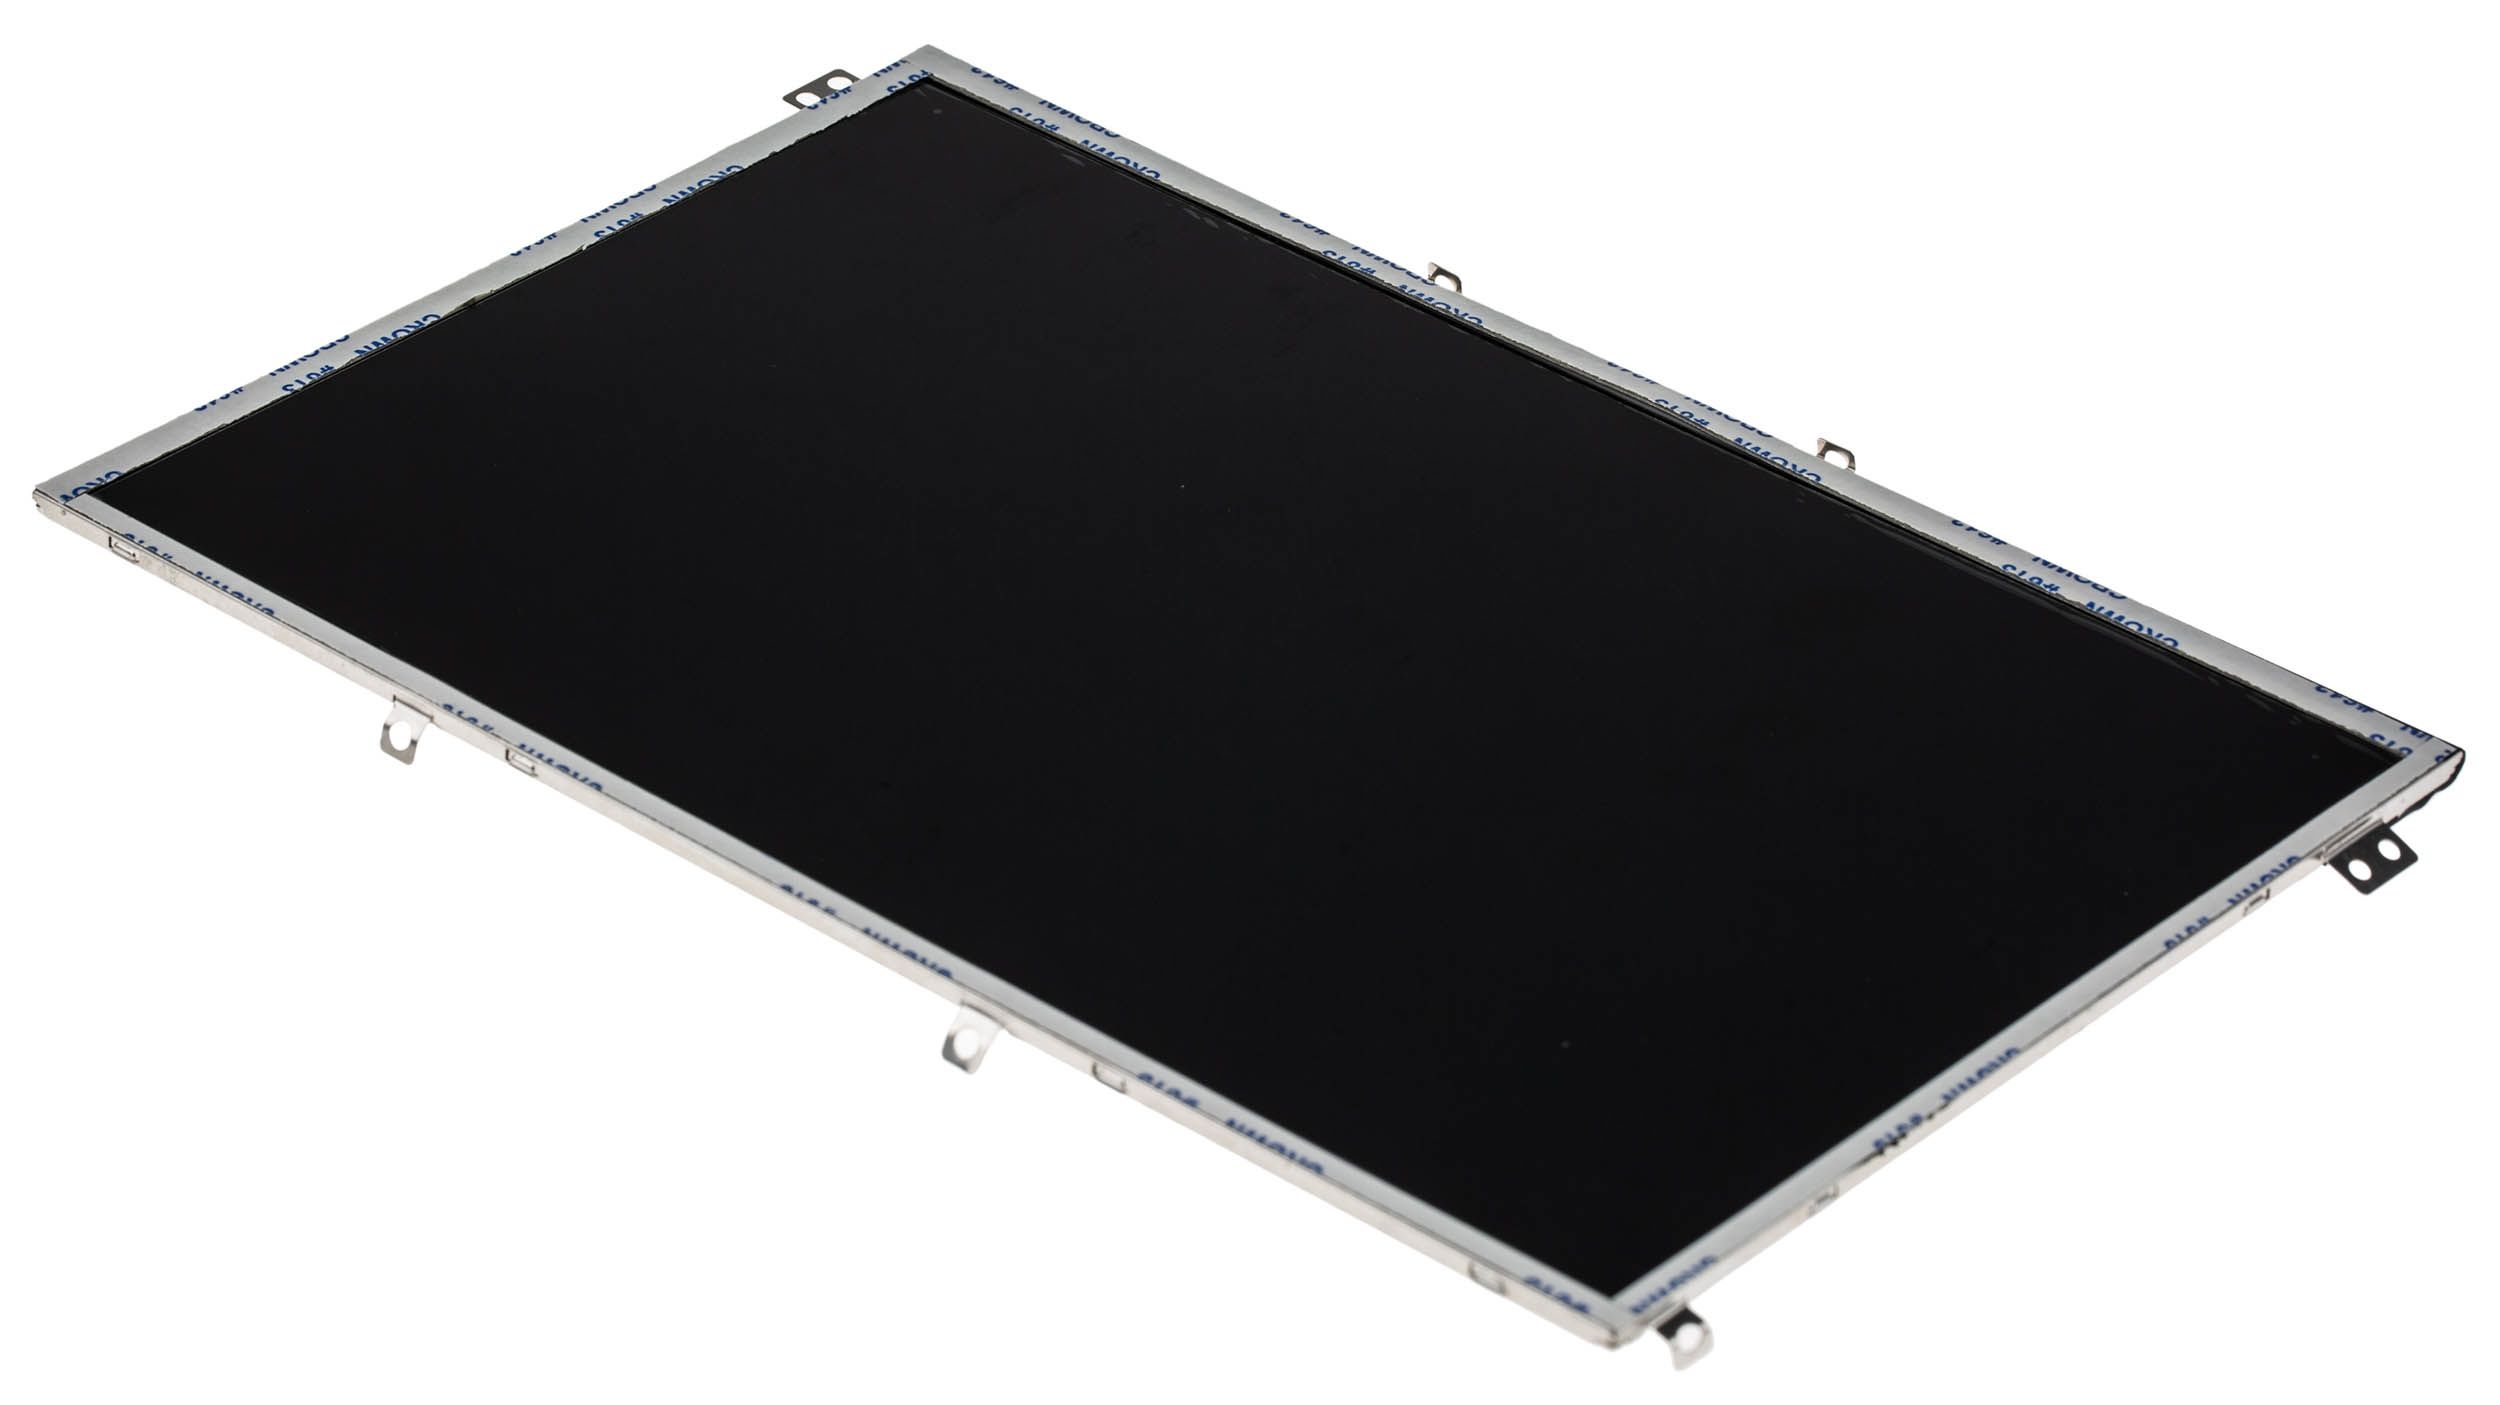 Pantalla LCD de color ADAFRUIT INDUSTRIES de 10.1pulgada, compatible con Arduino, BeagleBone, LattePanda, Raspberry Pi